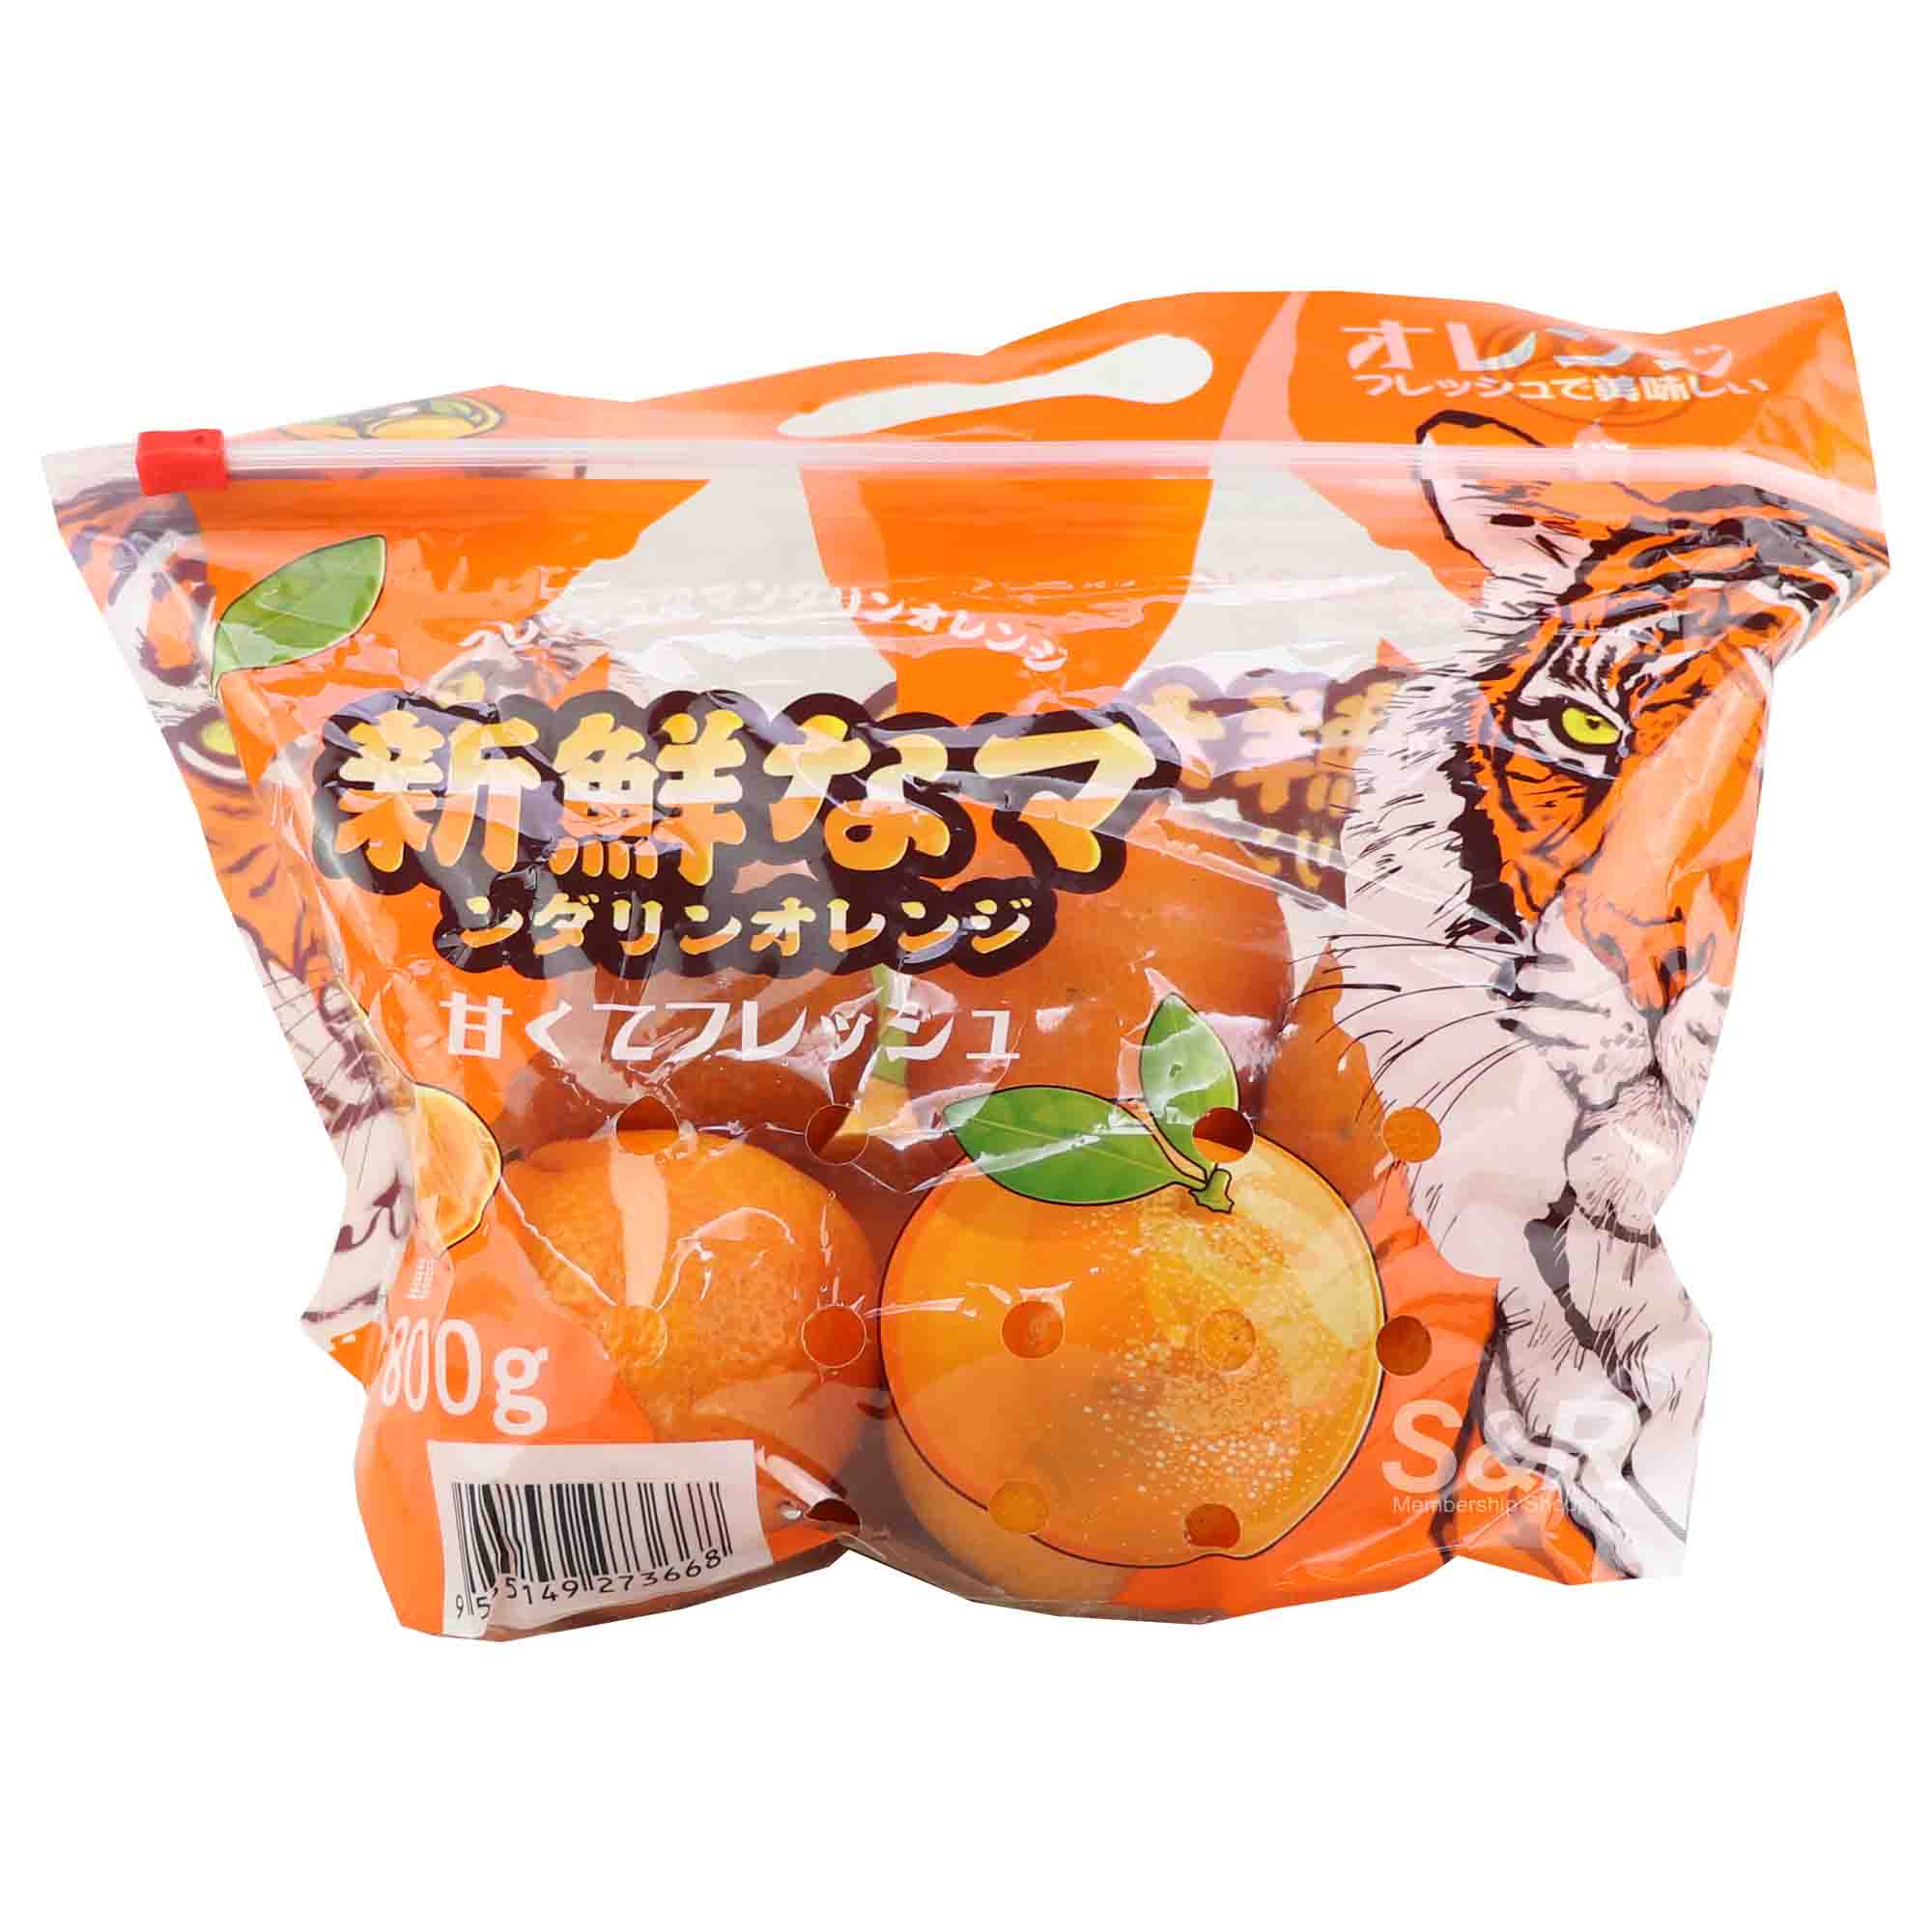 JP Mandarin Oranges 800g - 1kg